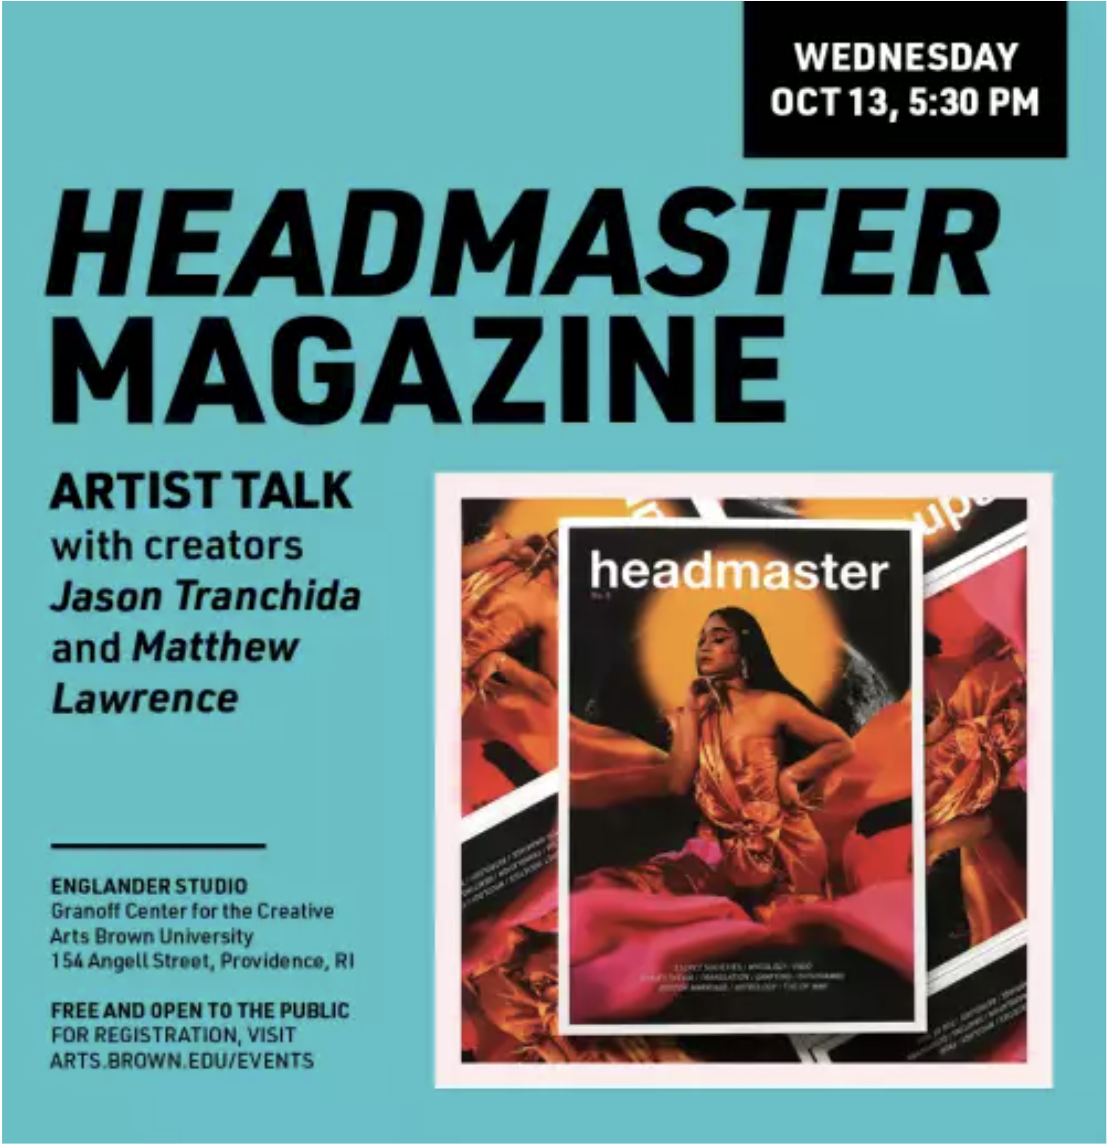 Headmaster magazine art